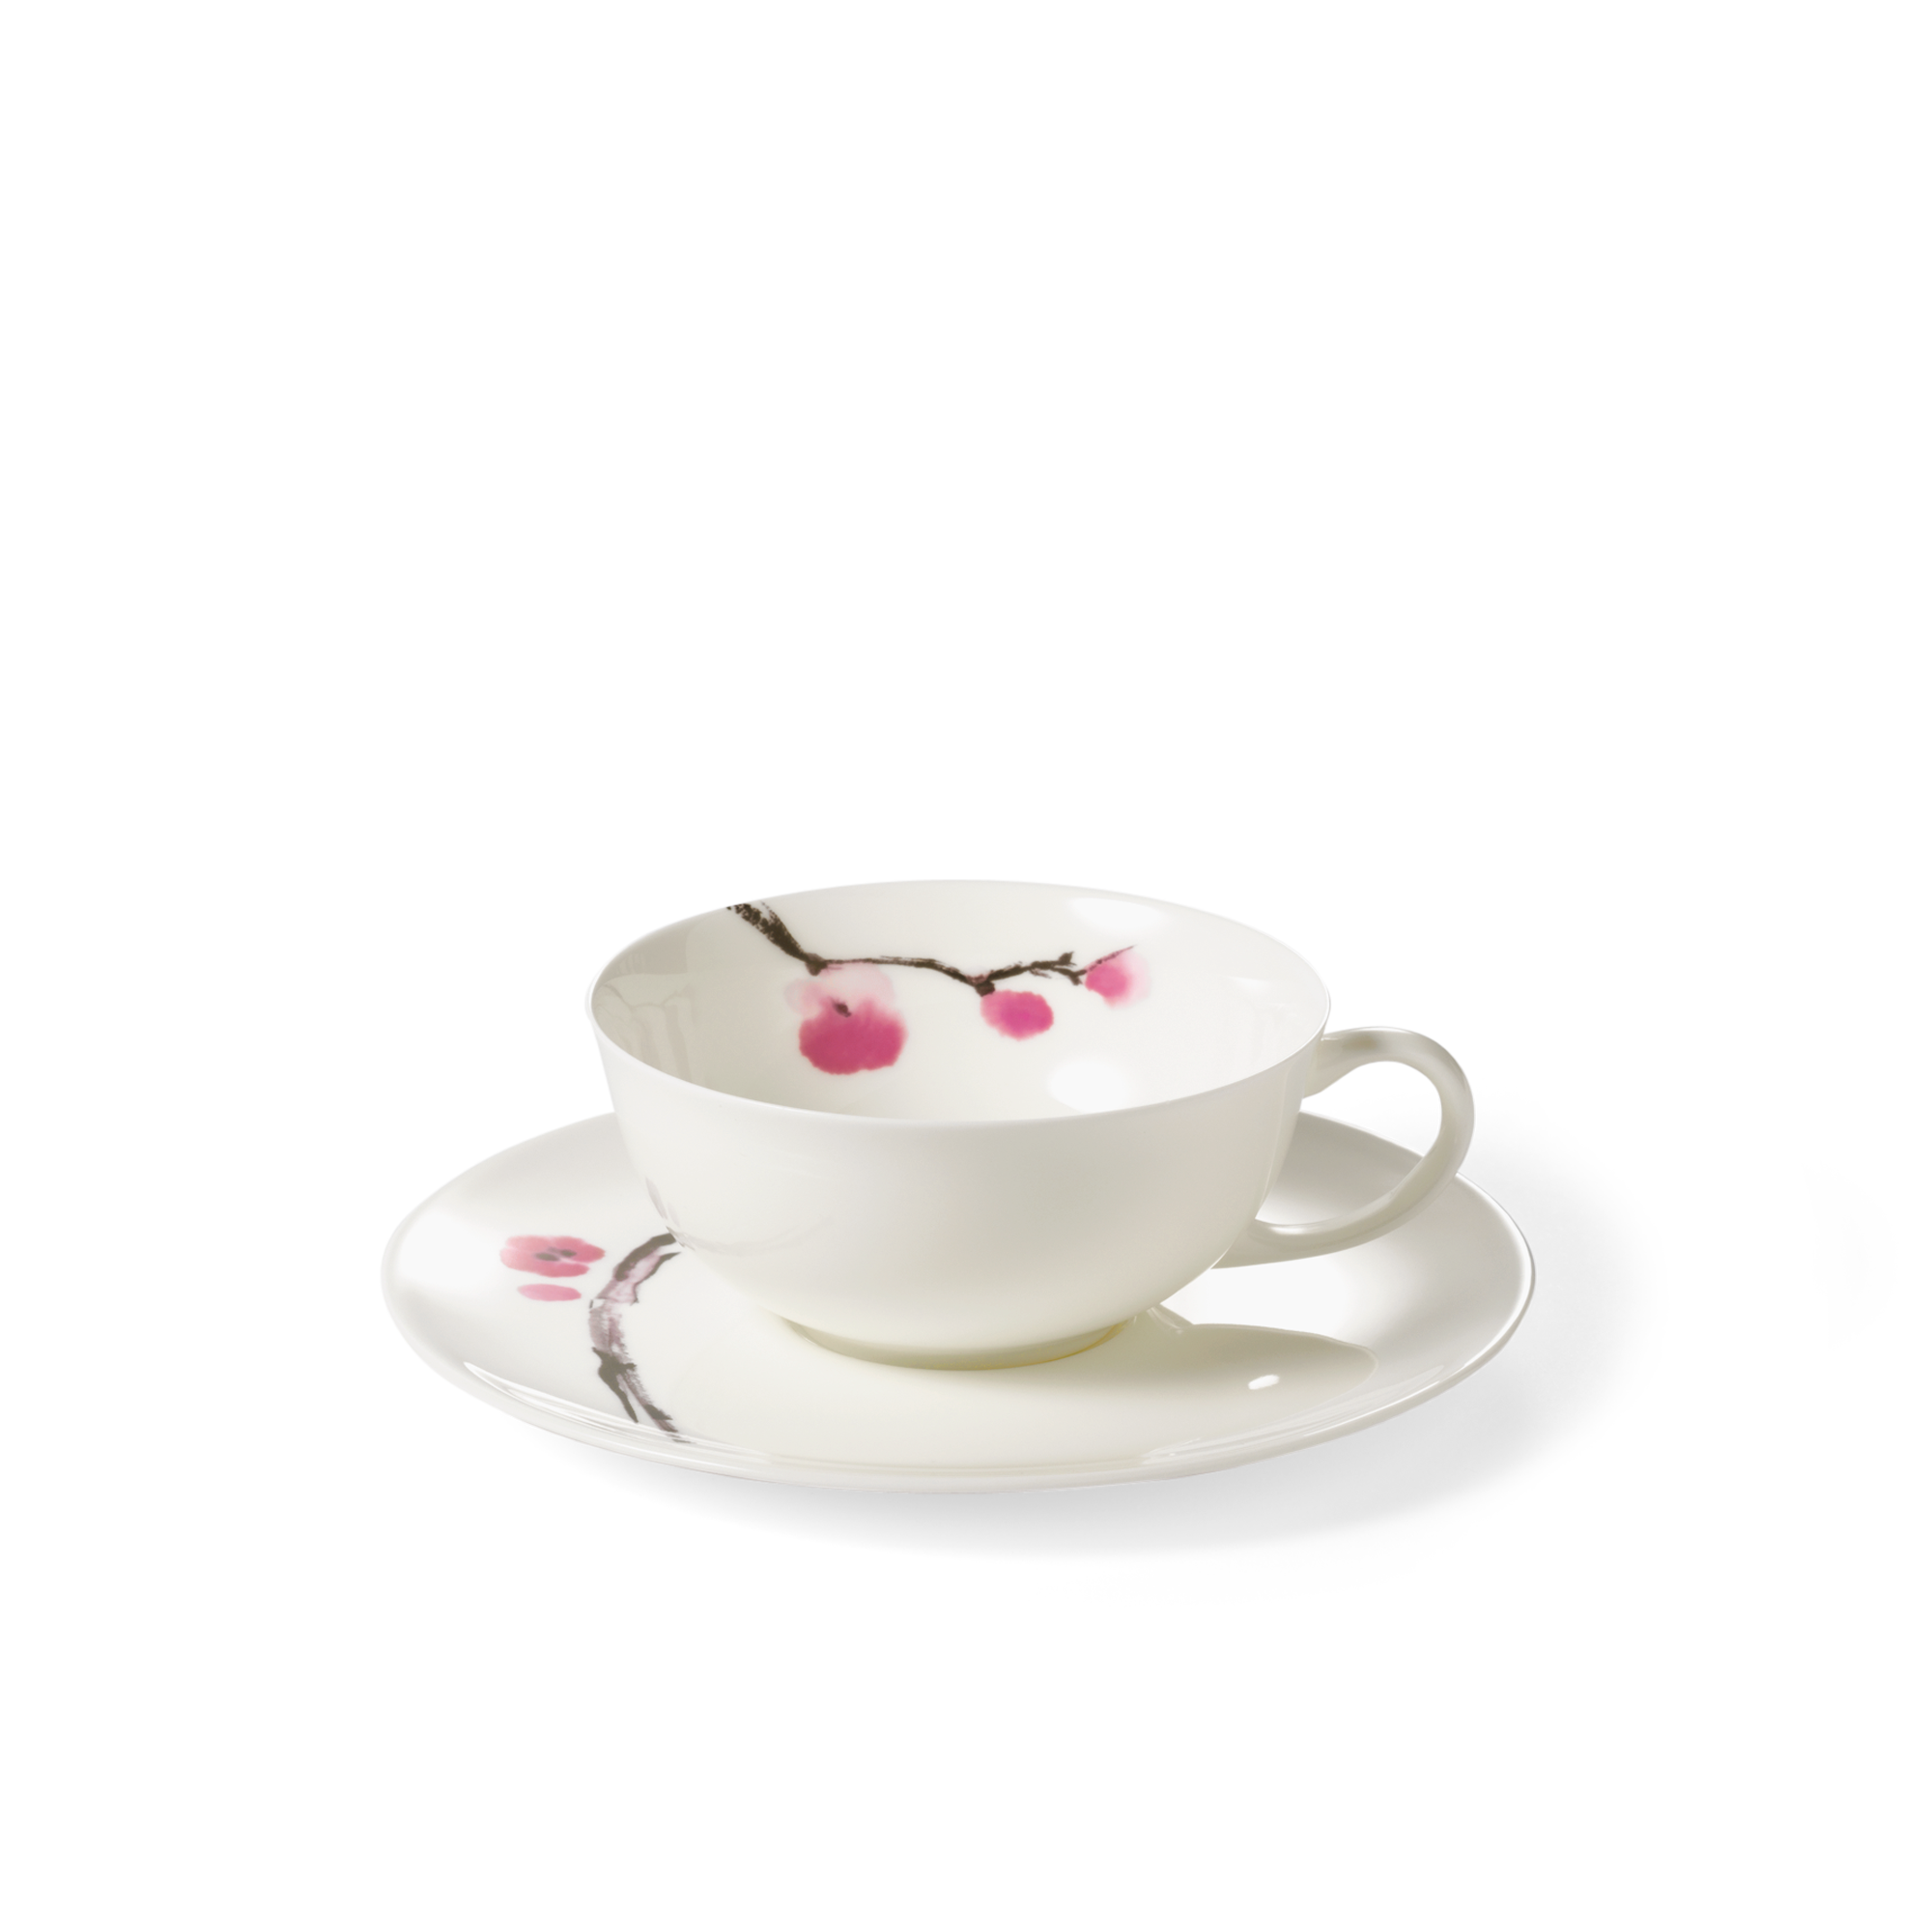 Cherry Blossom teacup